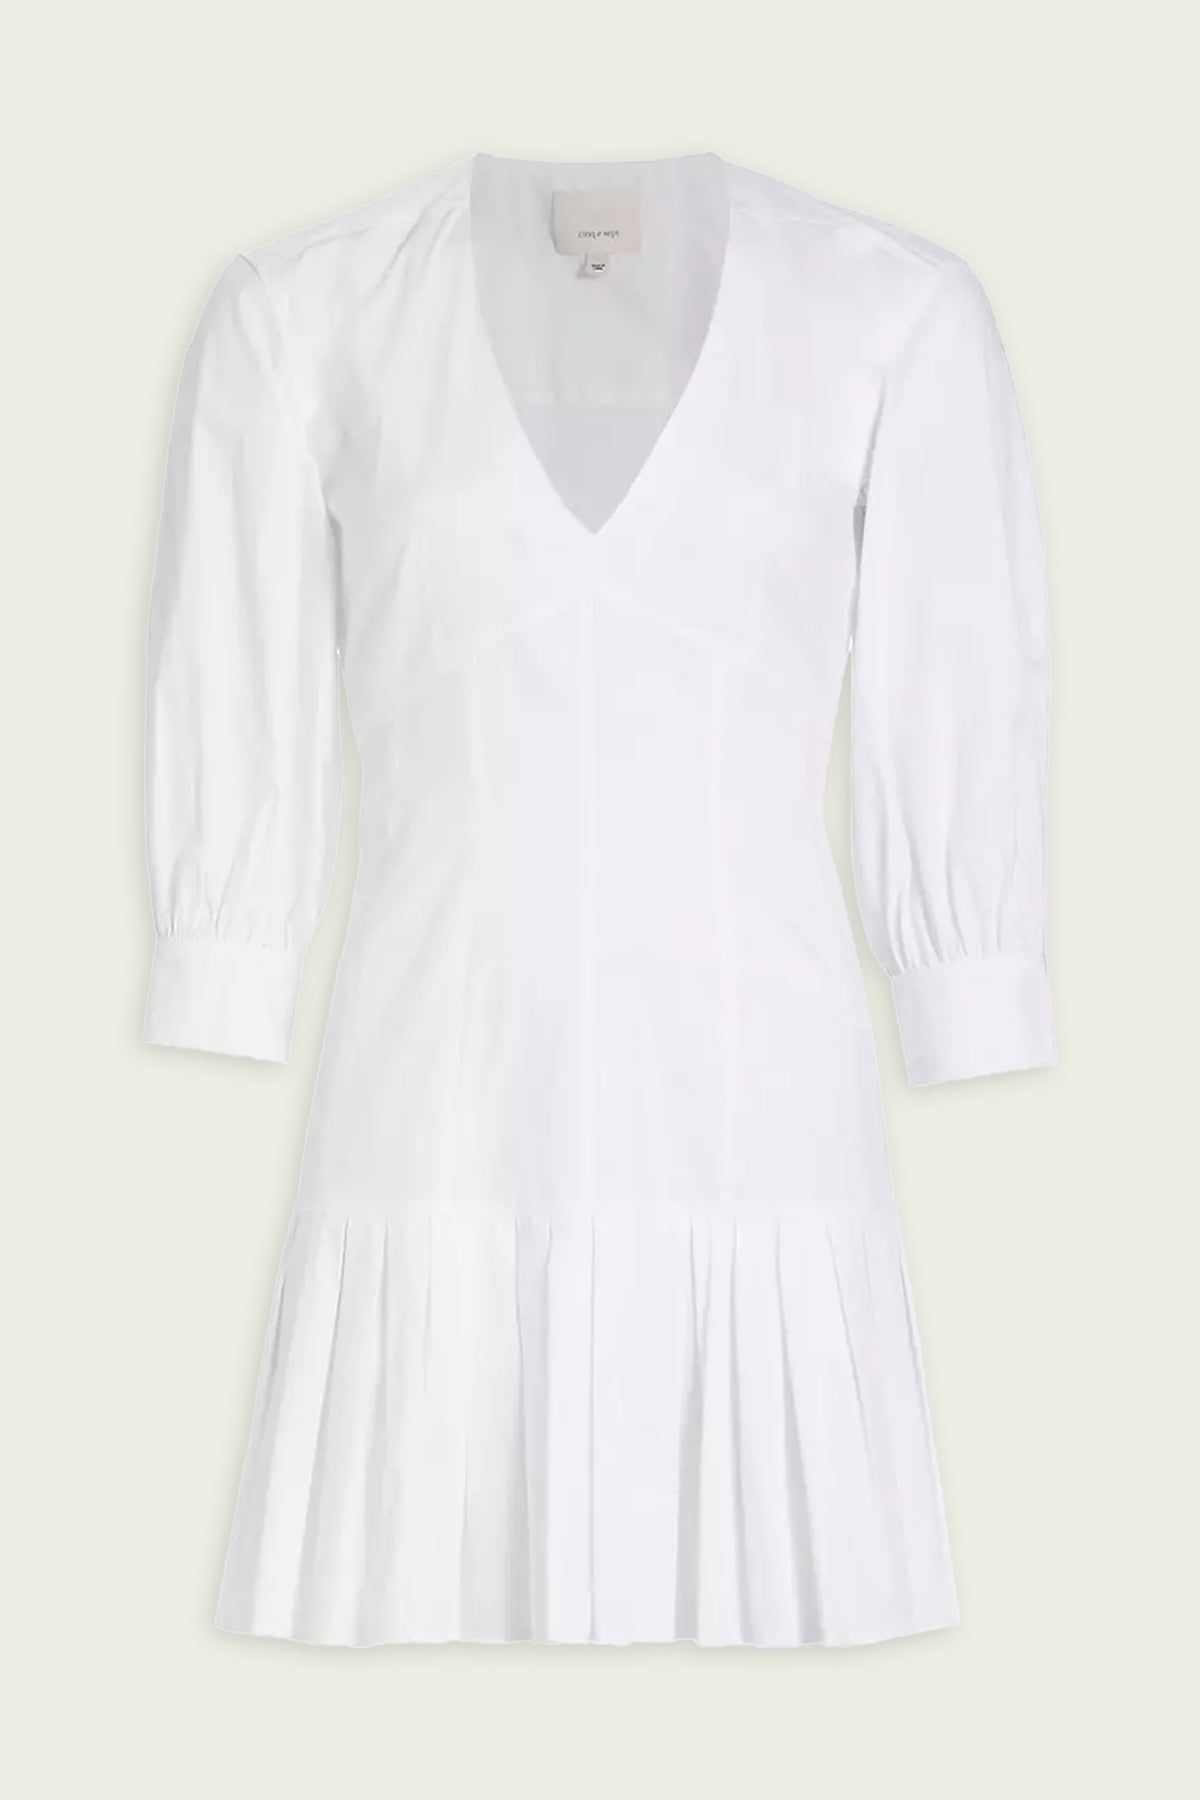 Sawyer Mini Dress in White - shop-olivia.com